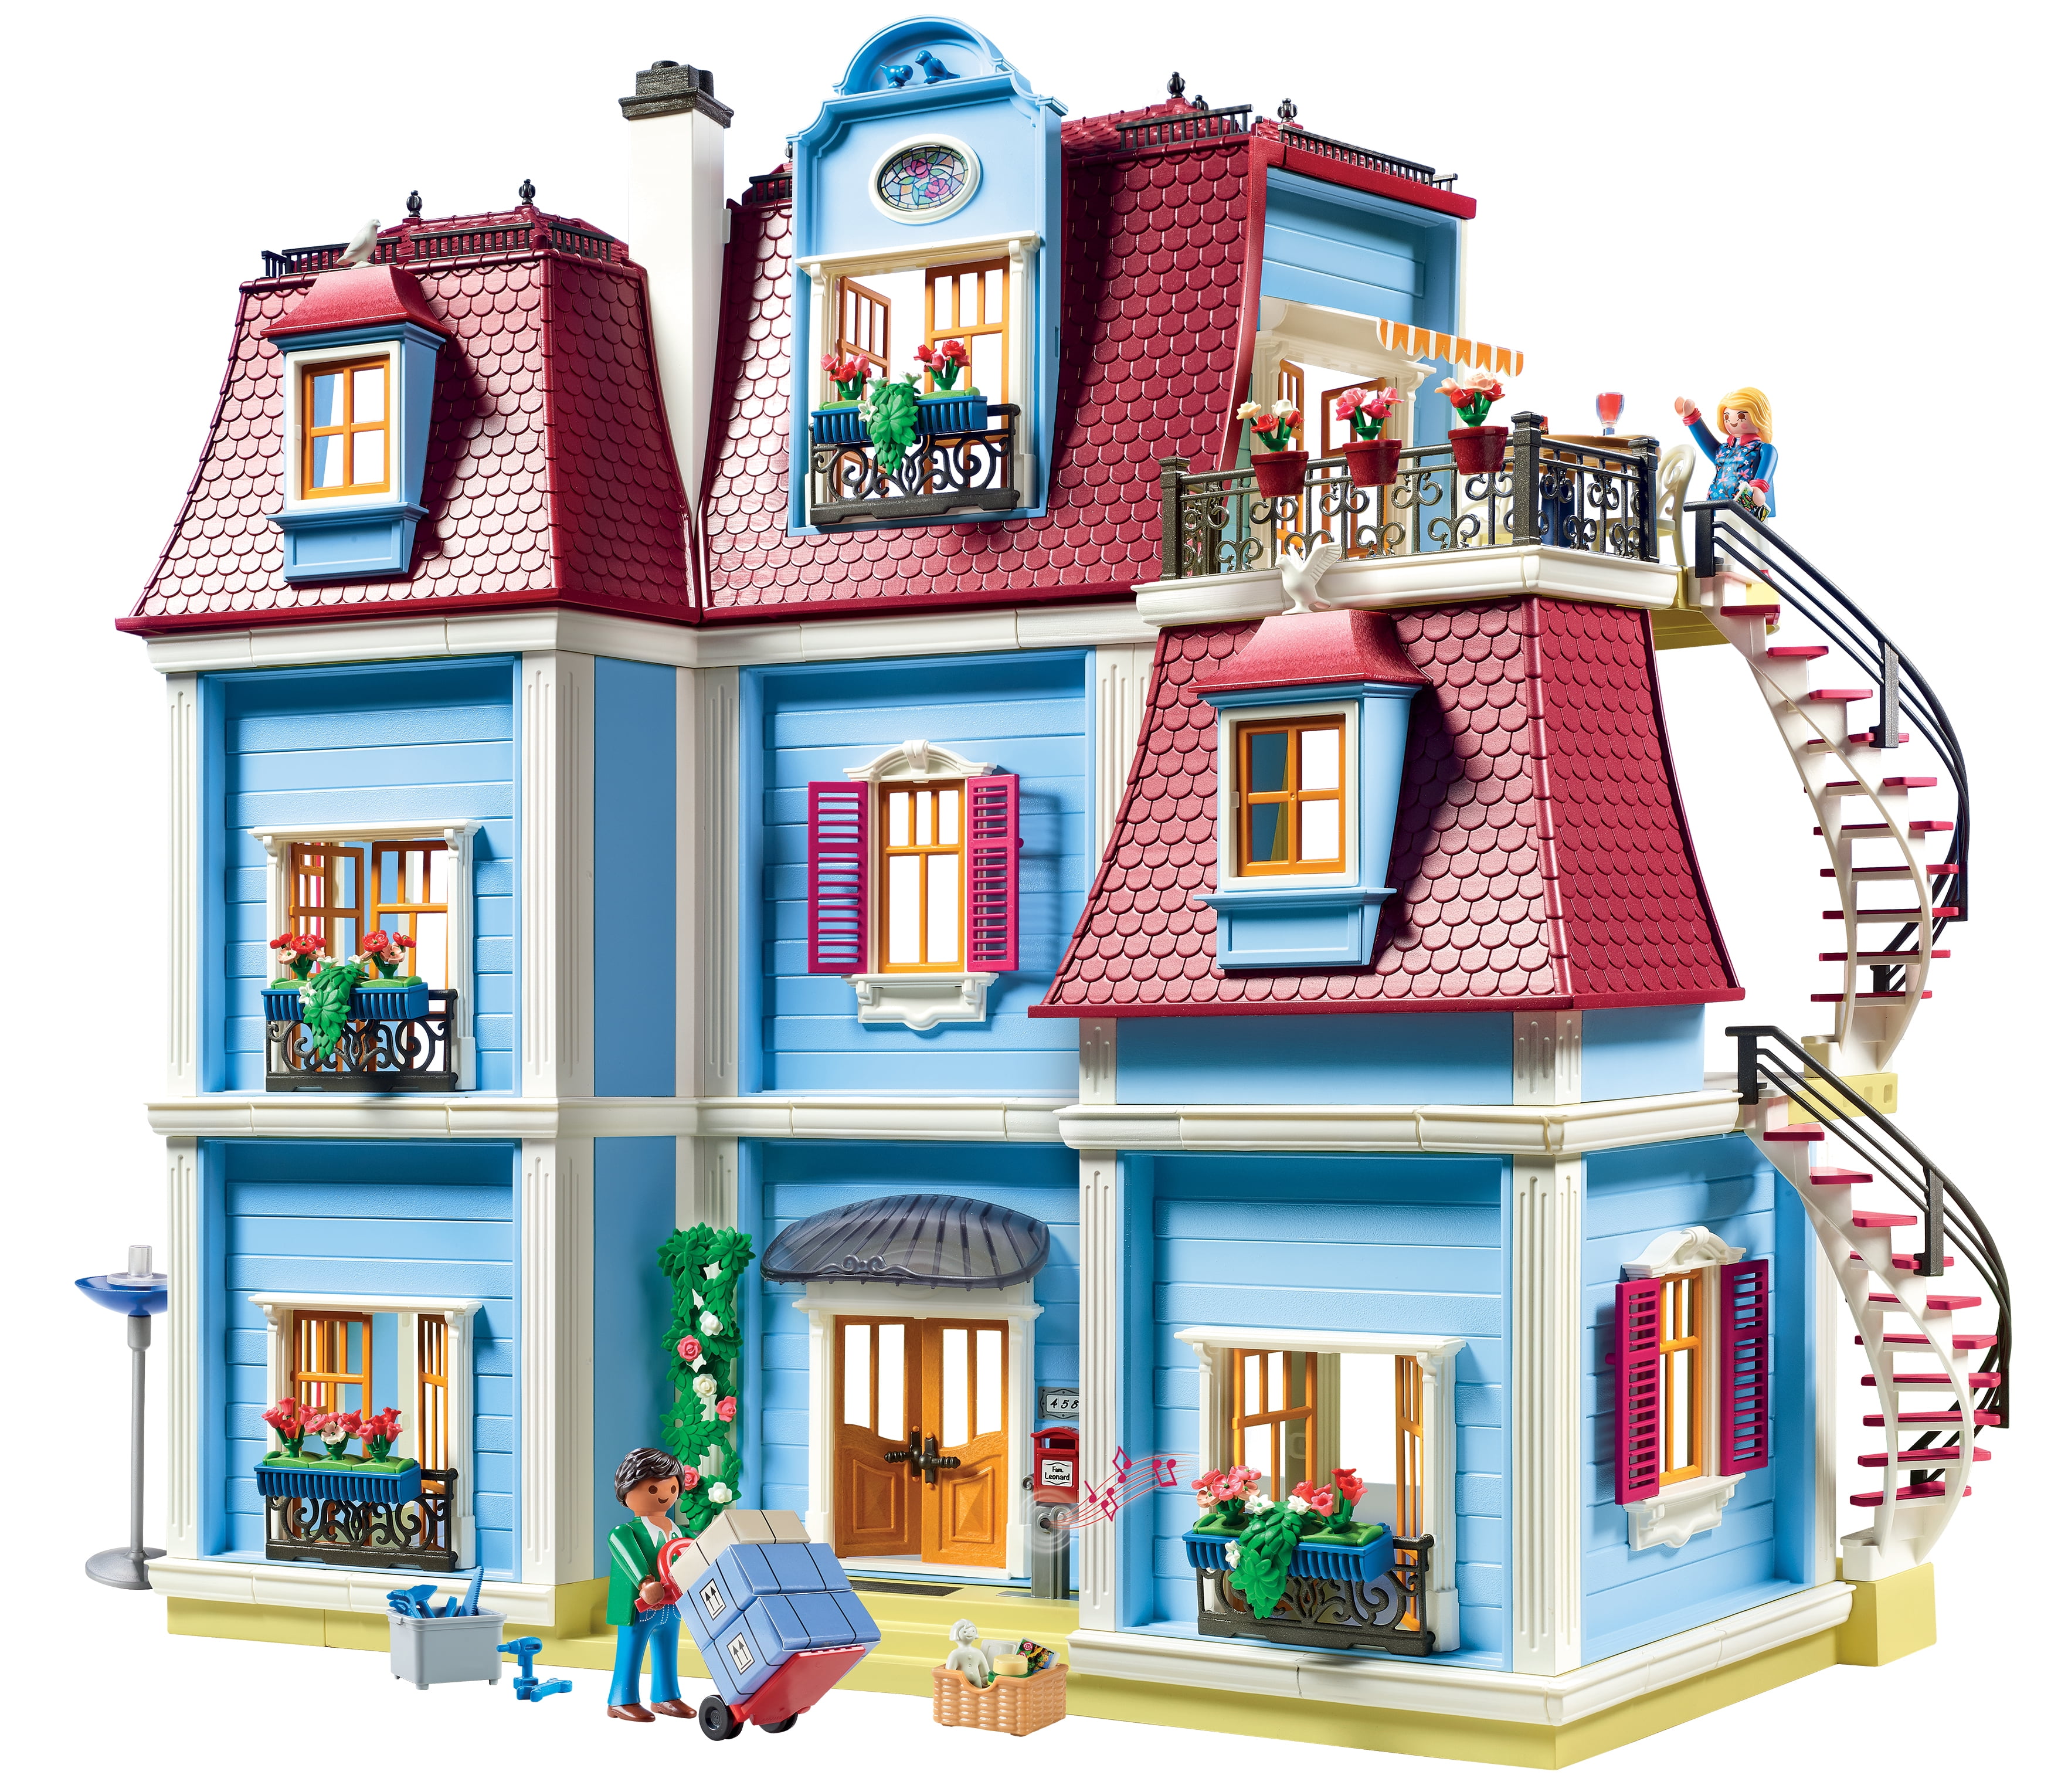 Playmobil PT-17 Woman Figure City Life Holiday School Dollhouse 